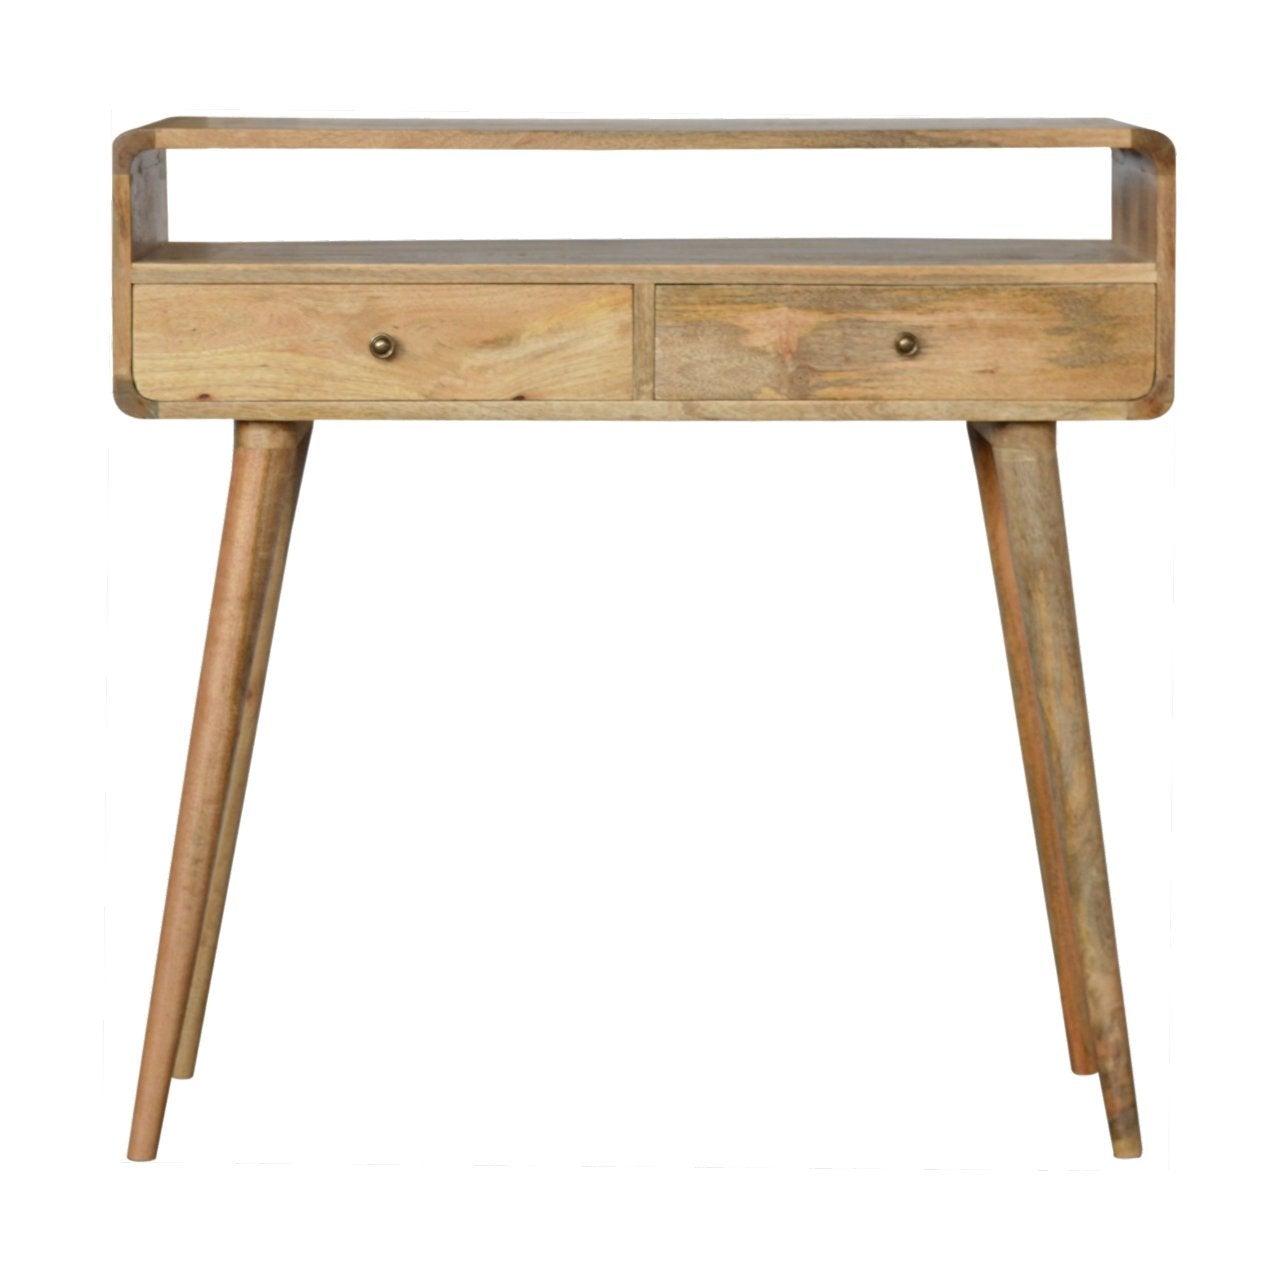 Curved oak-ish console table - crimblefest furniture - image 1